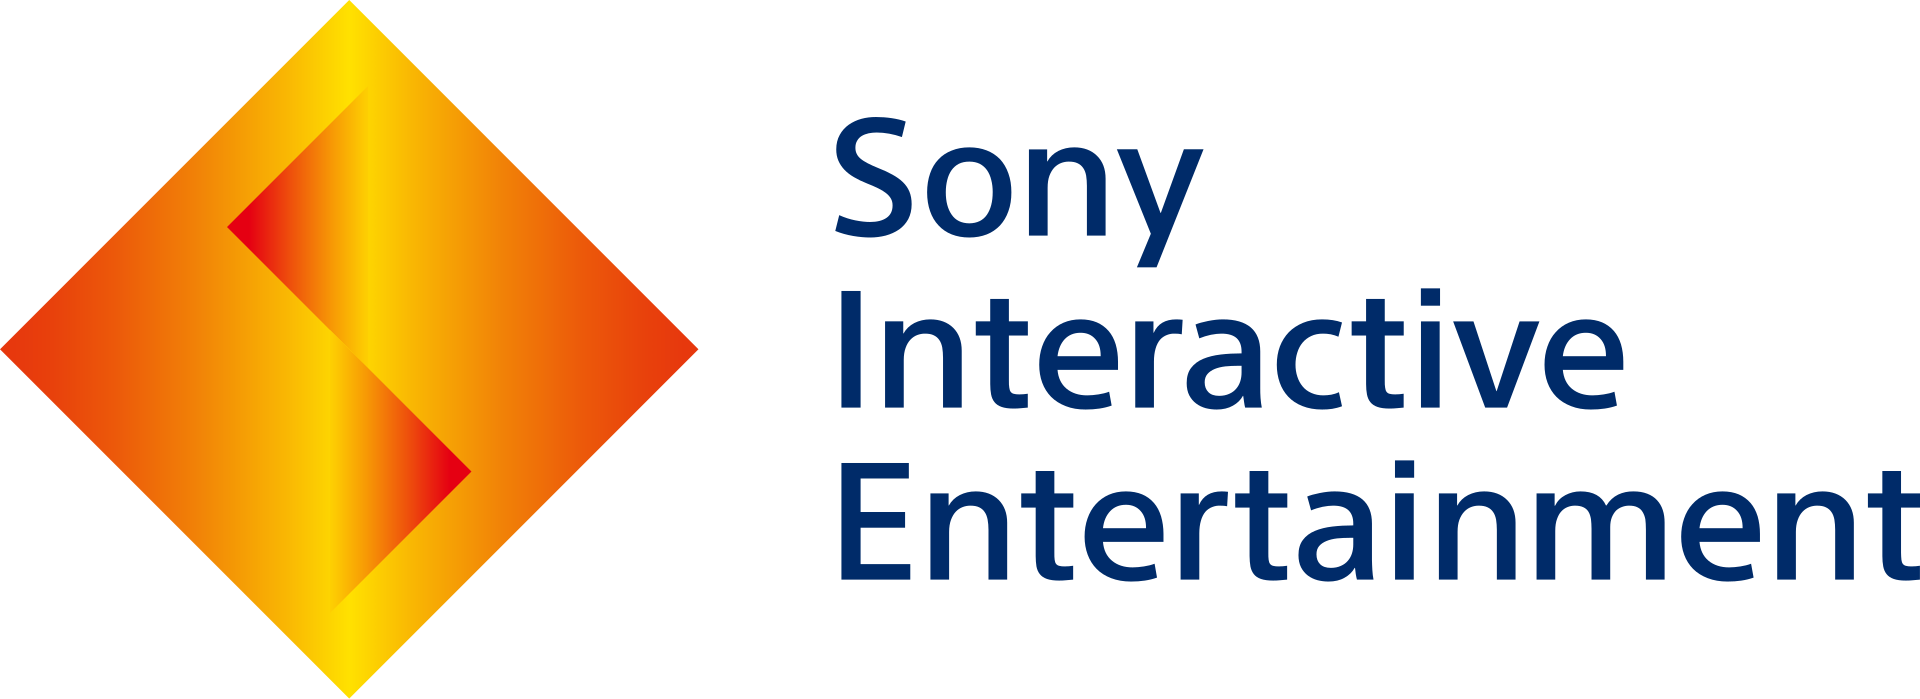 Sony Interactive Entertainment przejmuje Mobile Savage Game Studios